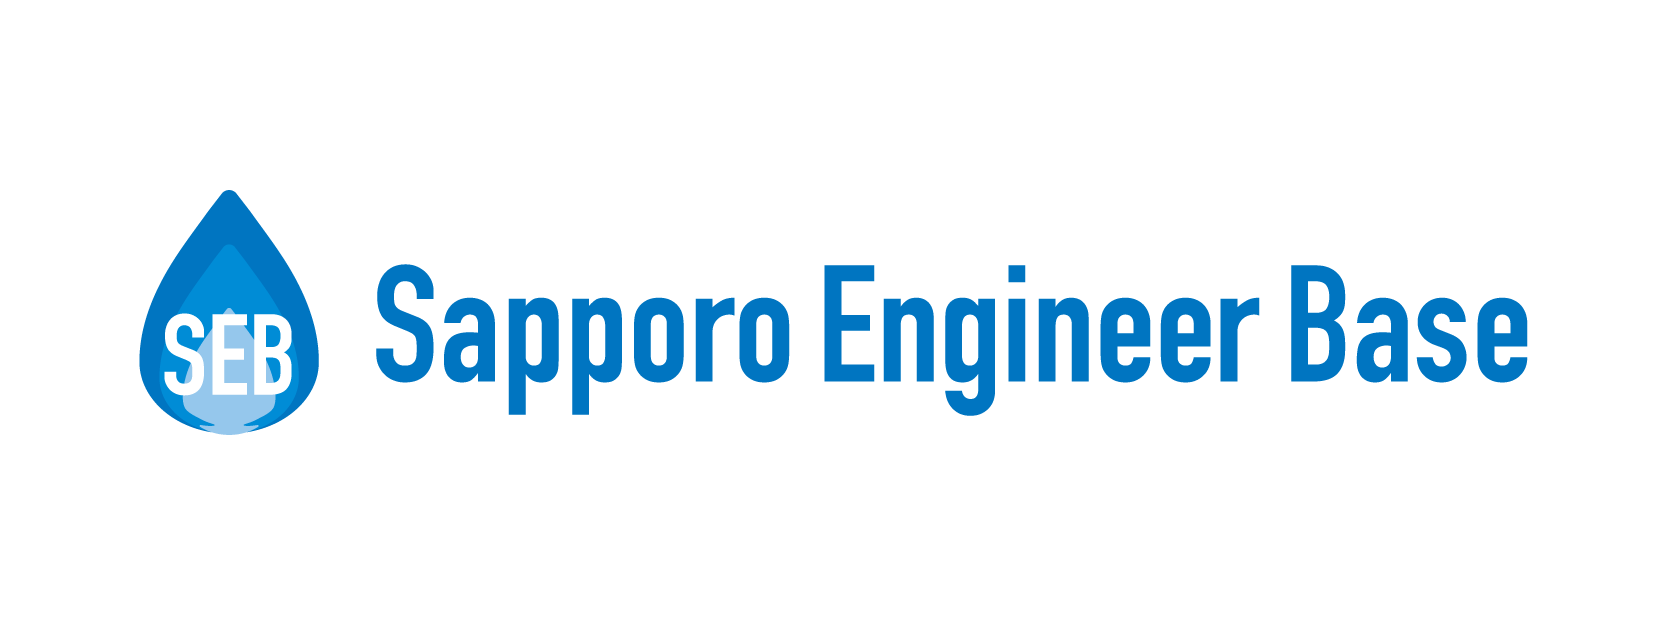 Sapporo Engineer Base